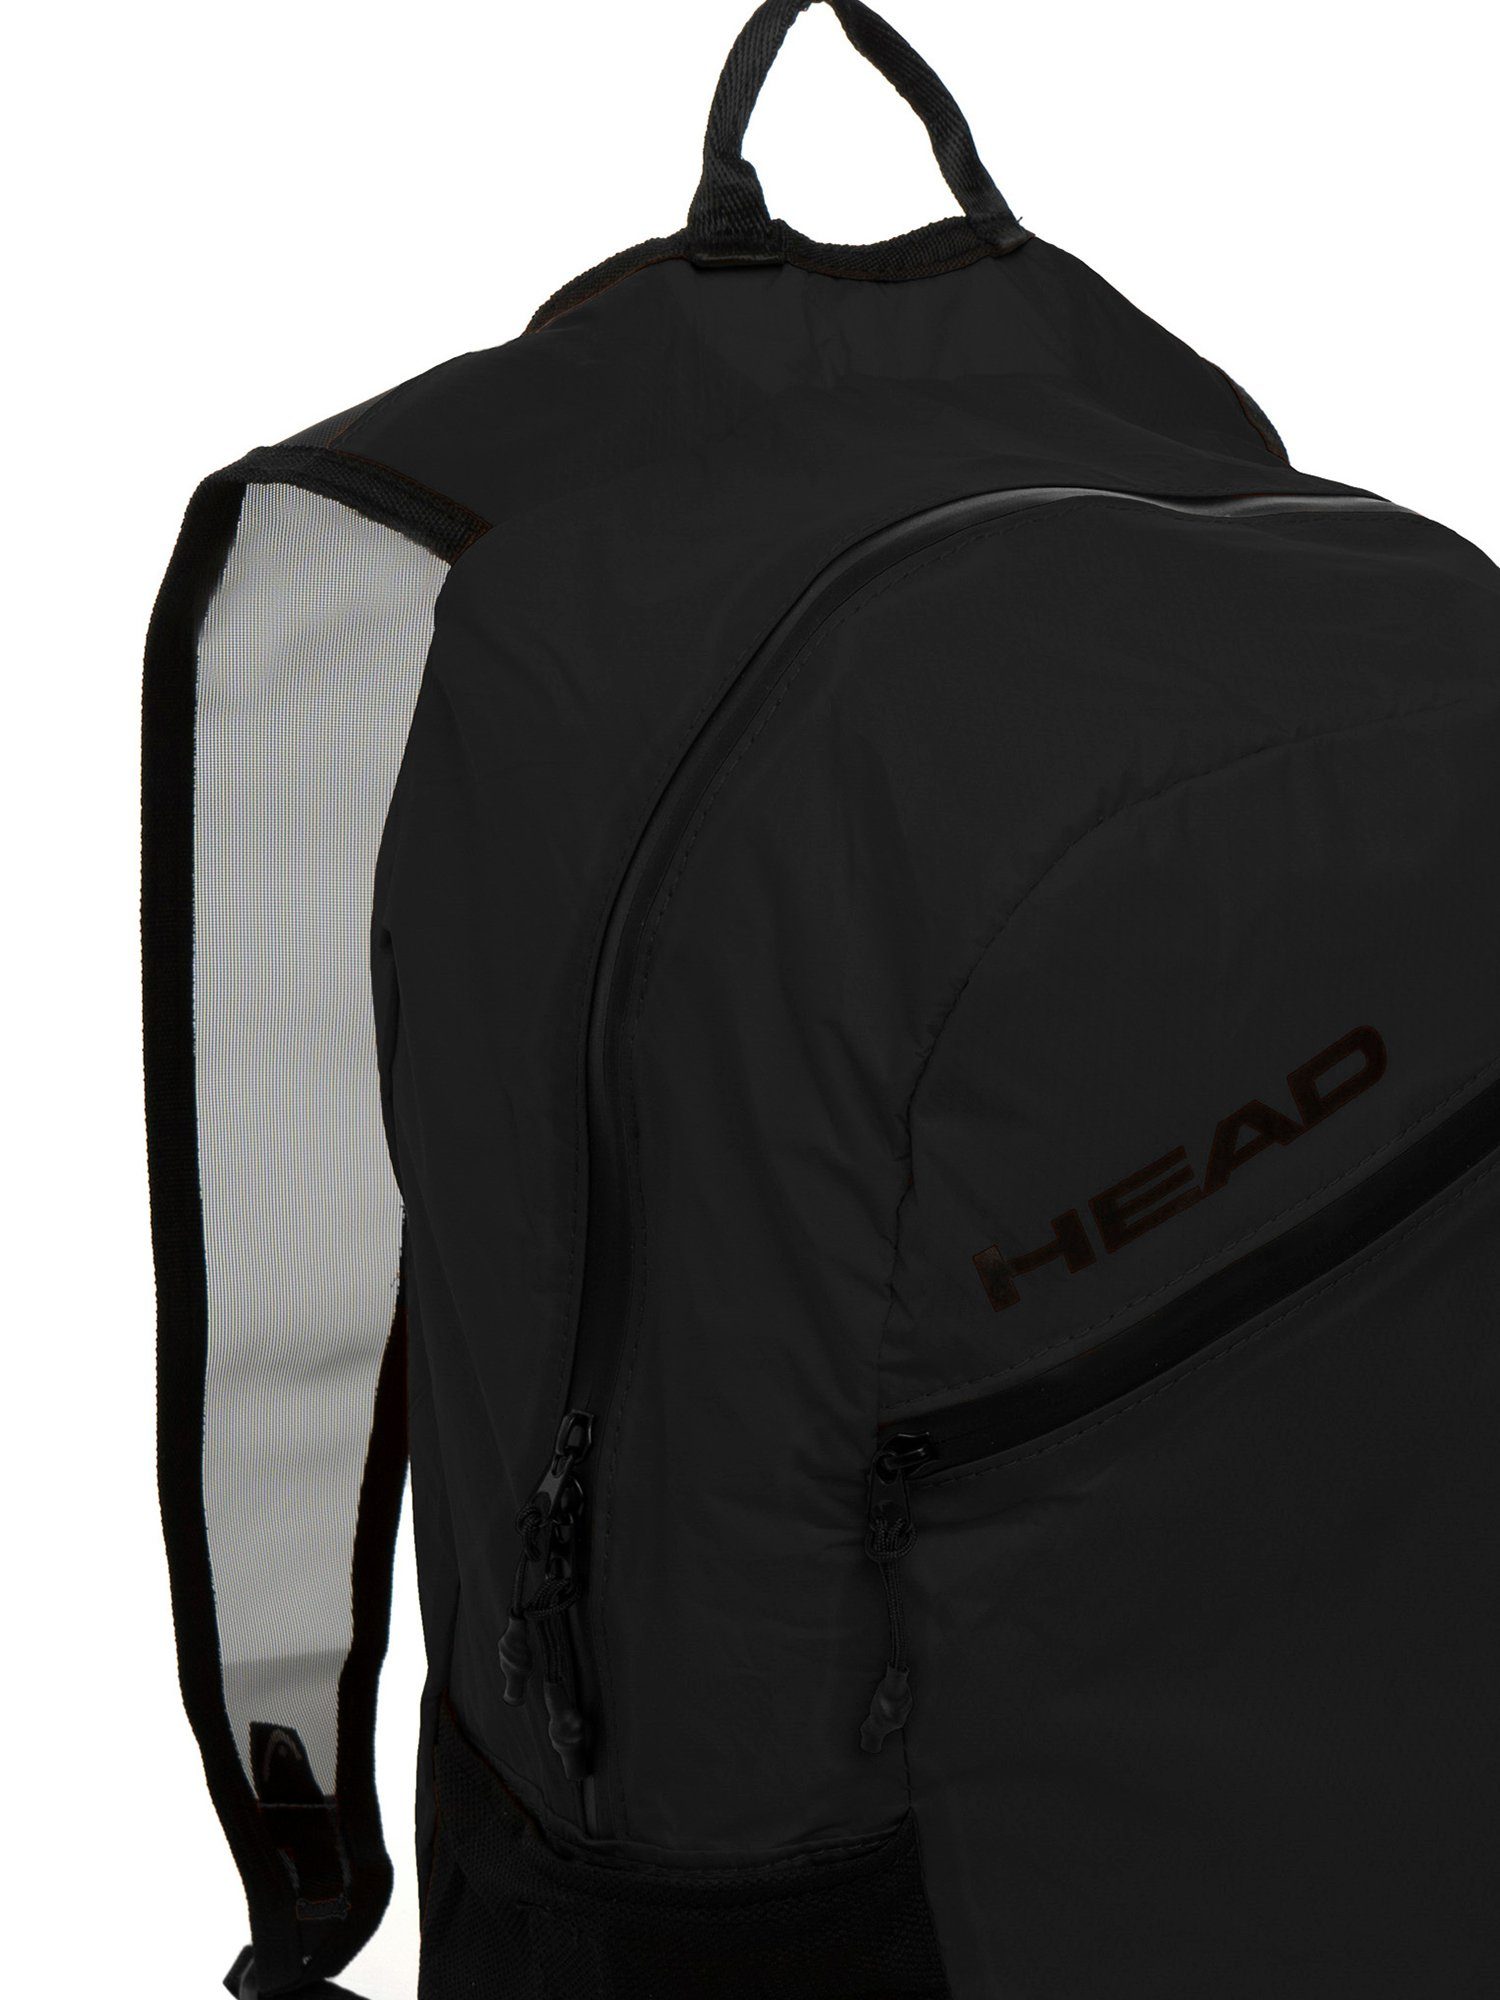 Schwarz Foldable Head Rucksack Backpack